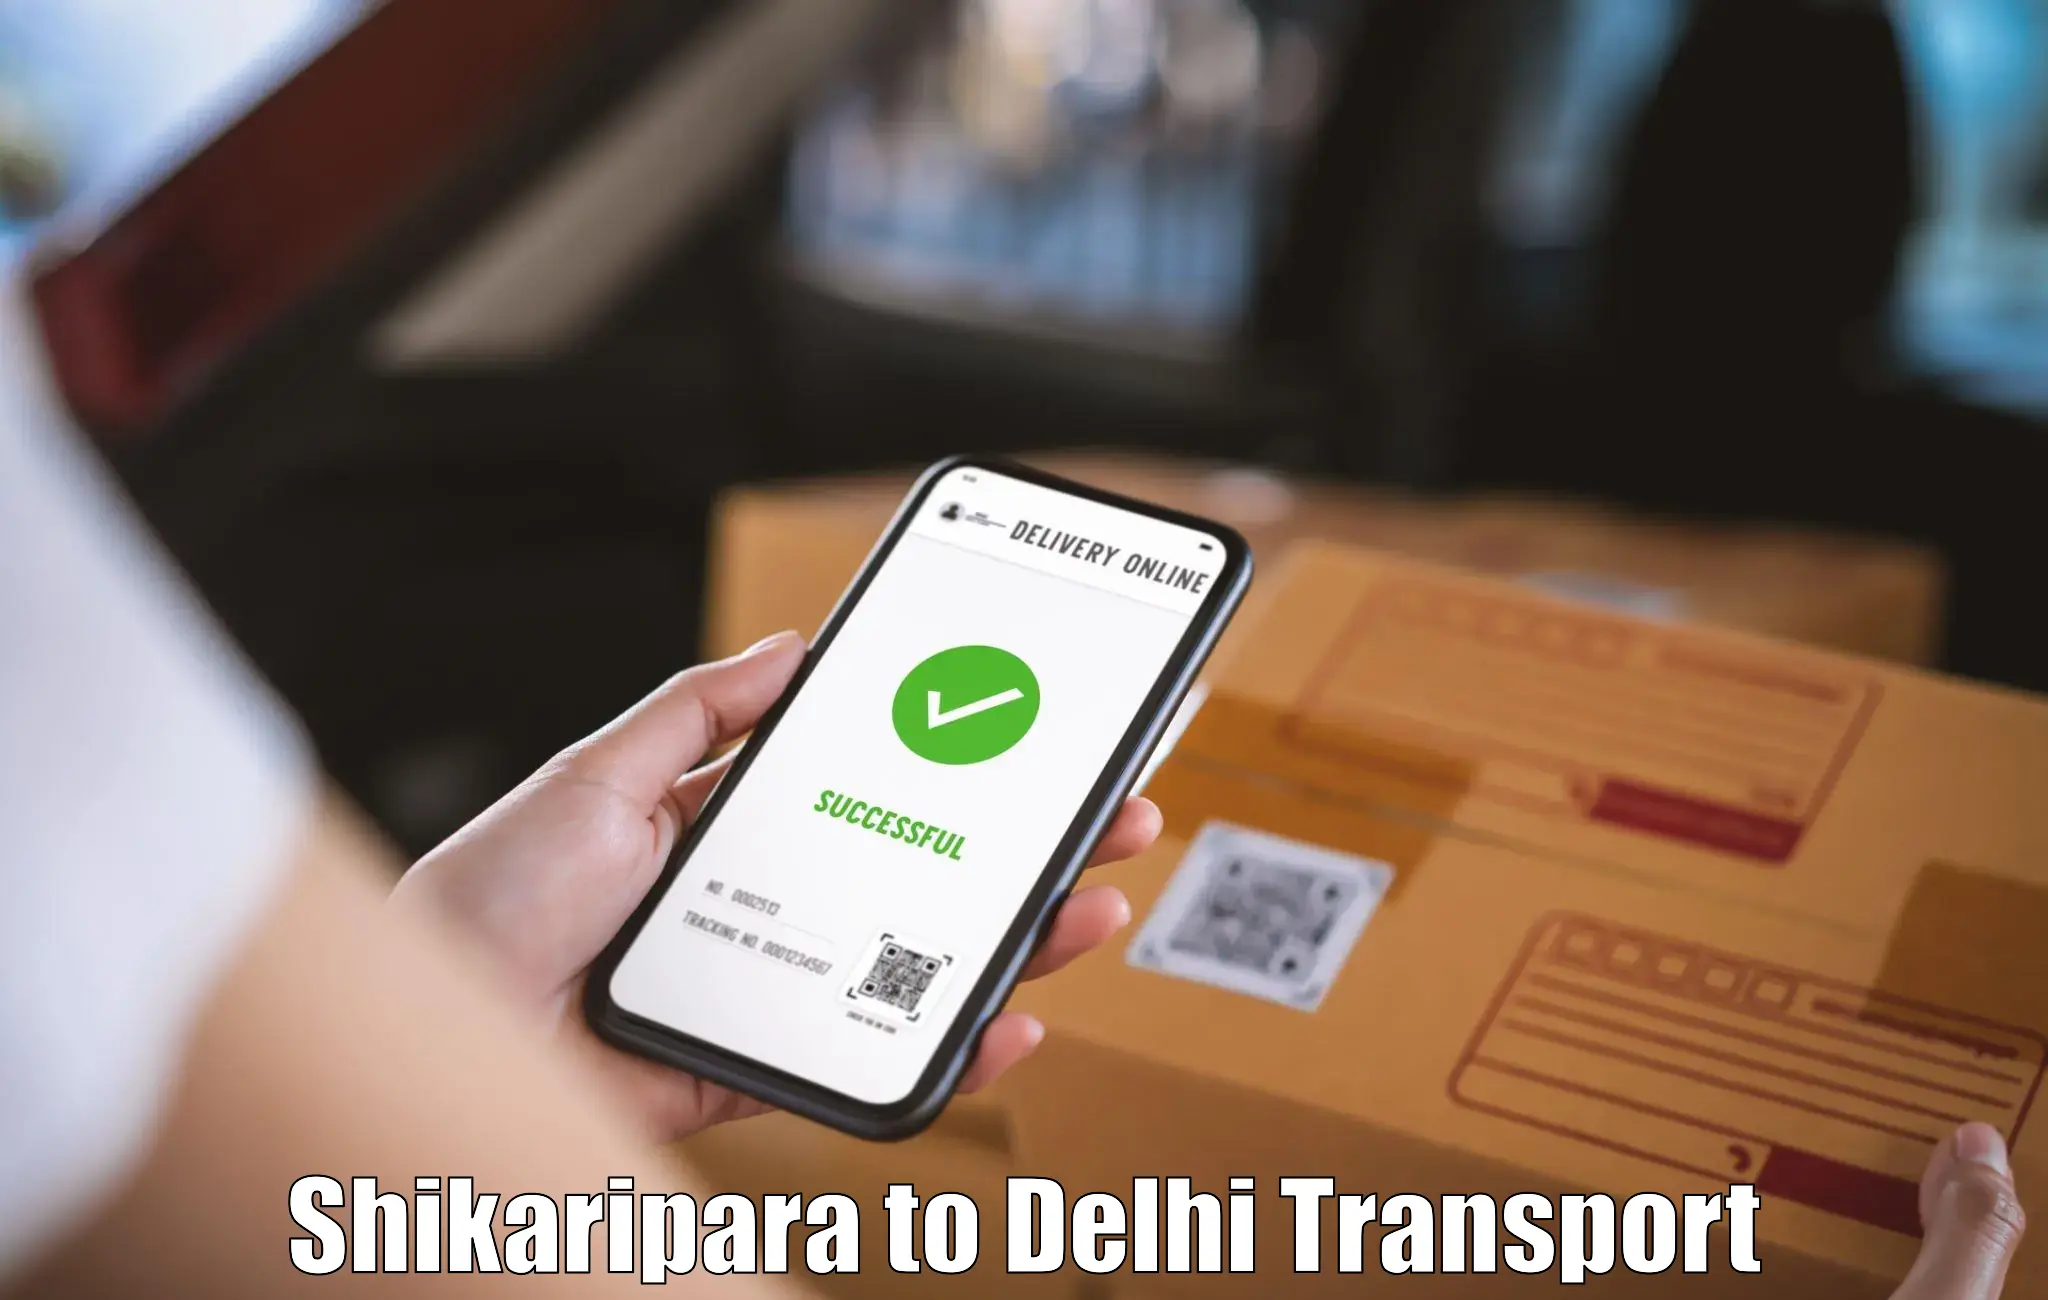 Goods delivery service Shikaripara to Delhi